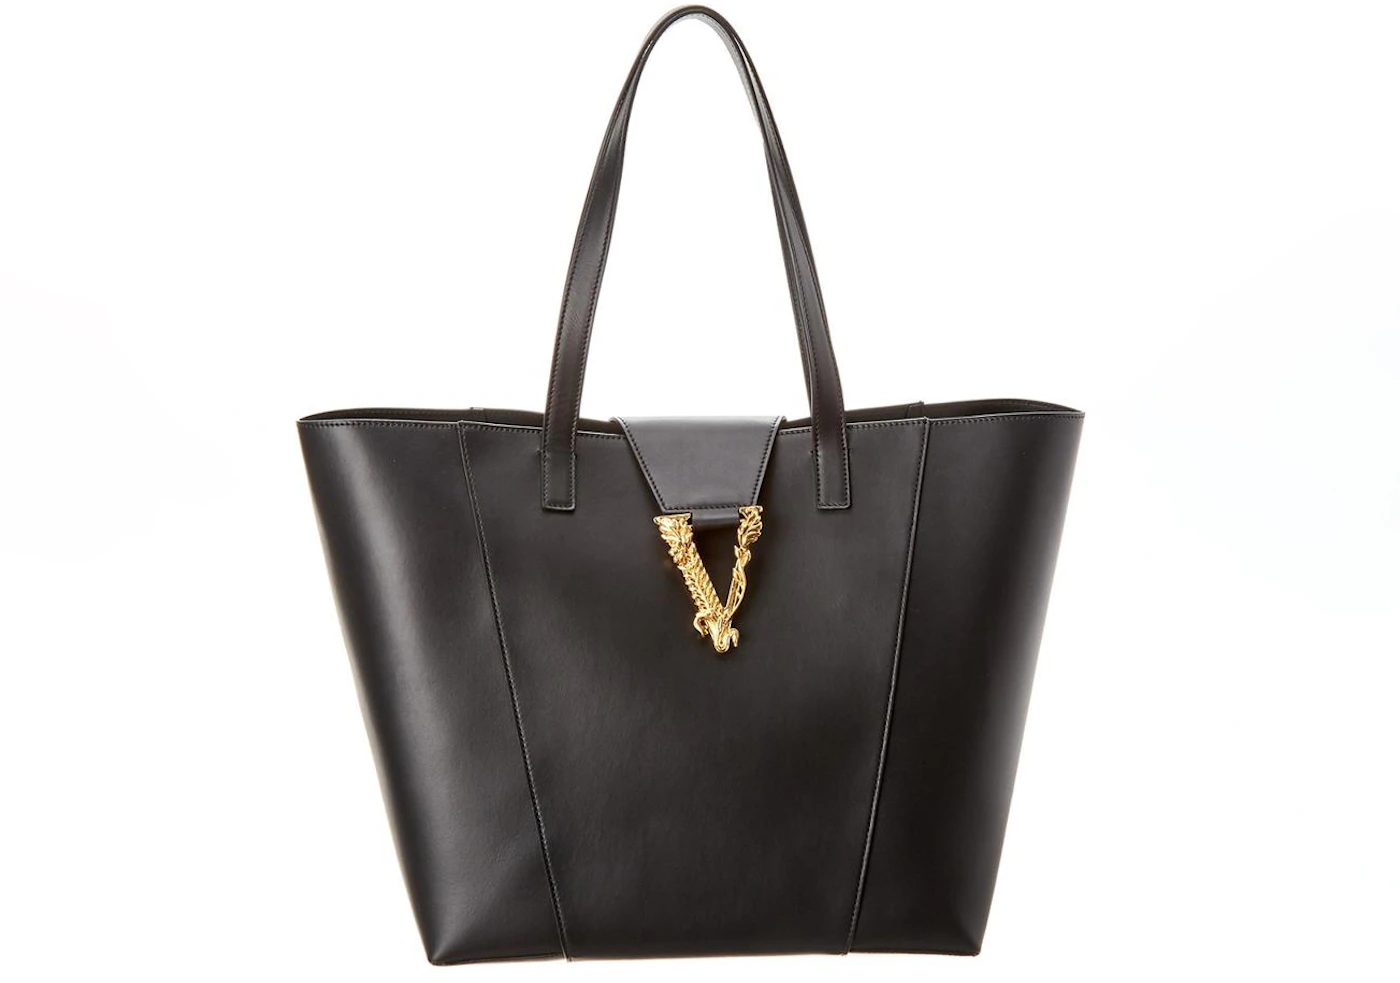 Versace Virtus Leather Tote Bag in Black